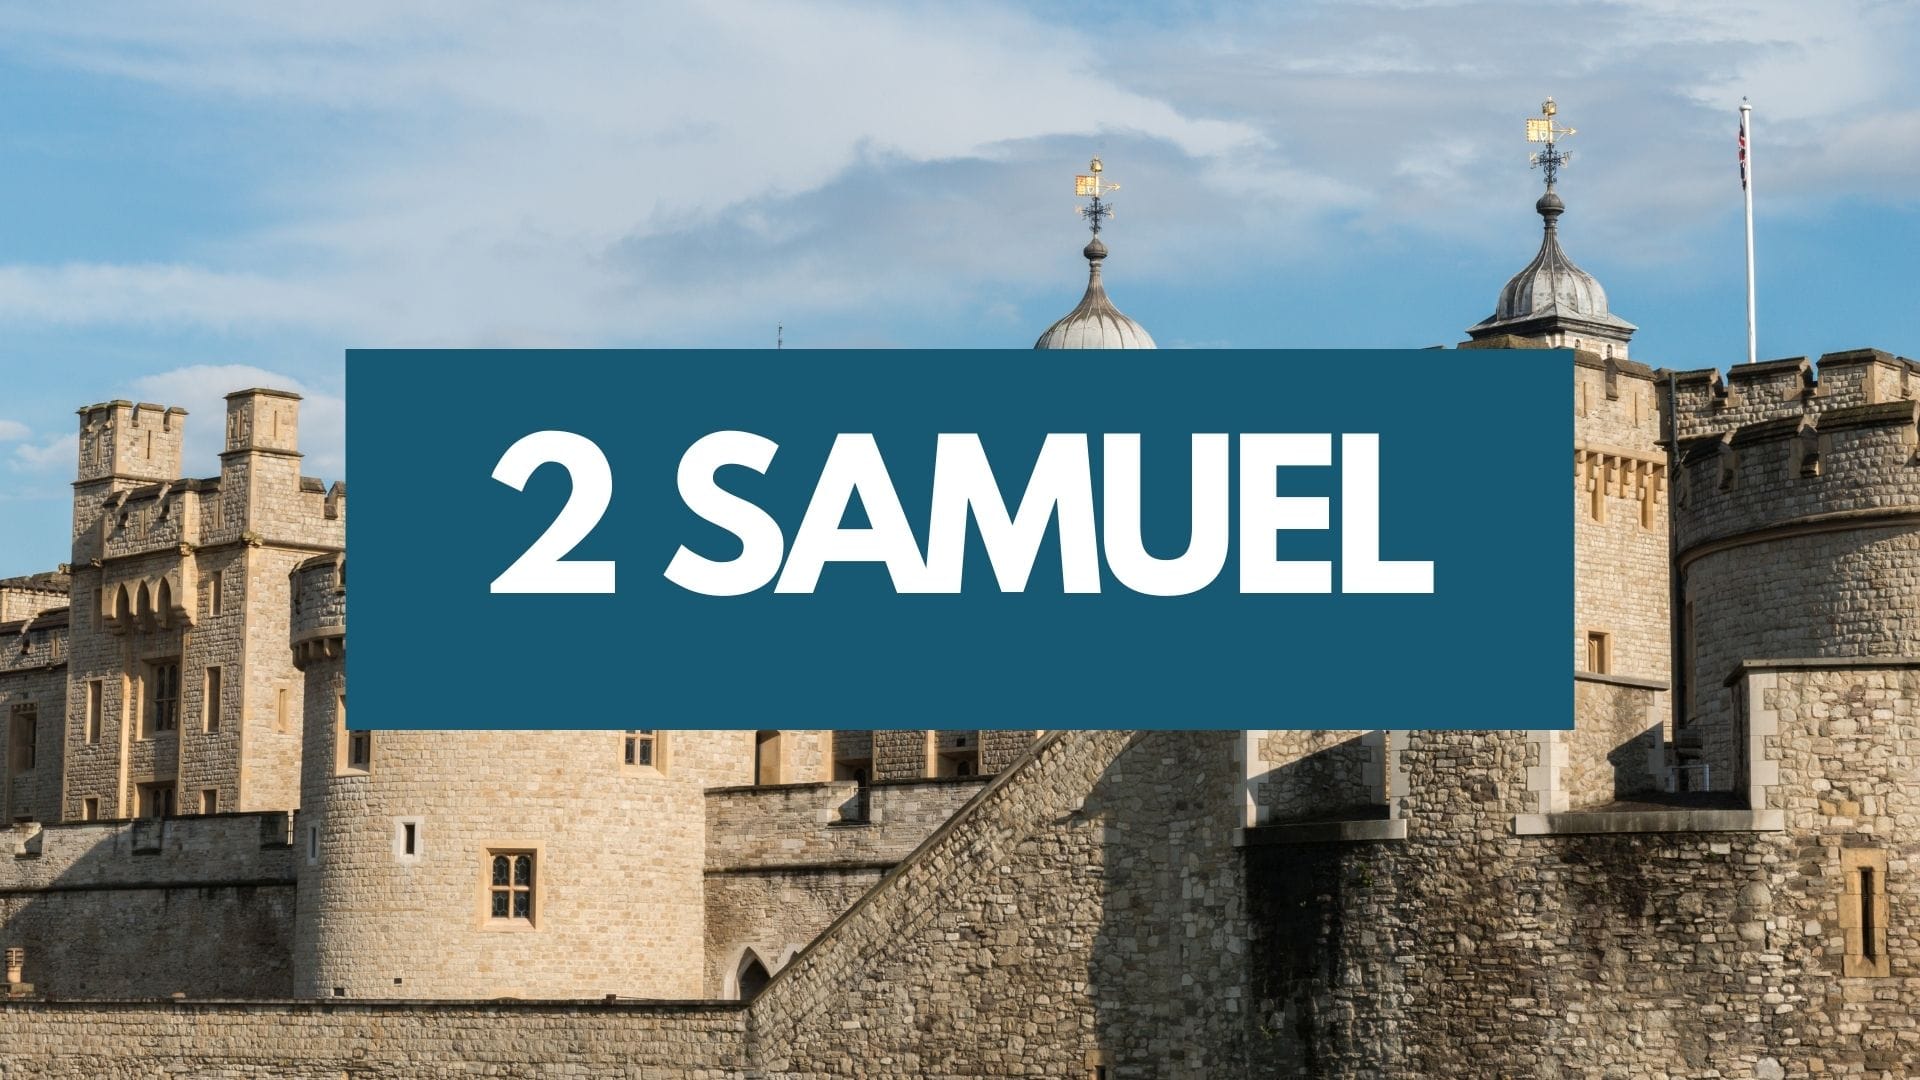 2 Samuel 22: David Karaoke Night